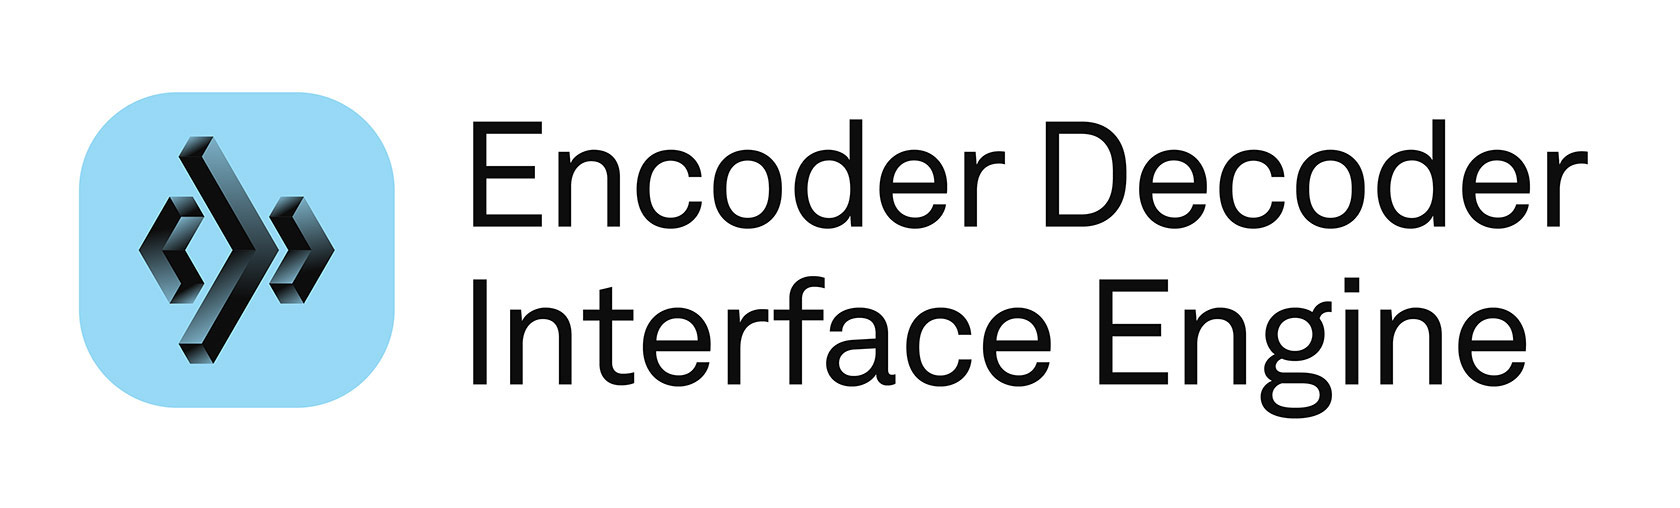 Encoder Decoder Interface Engine with icon